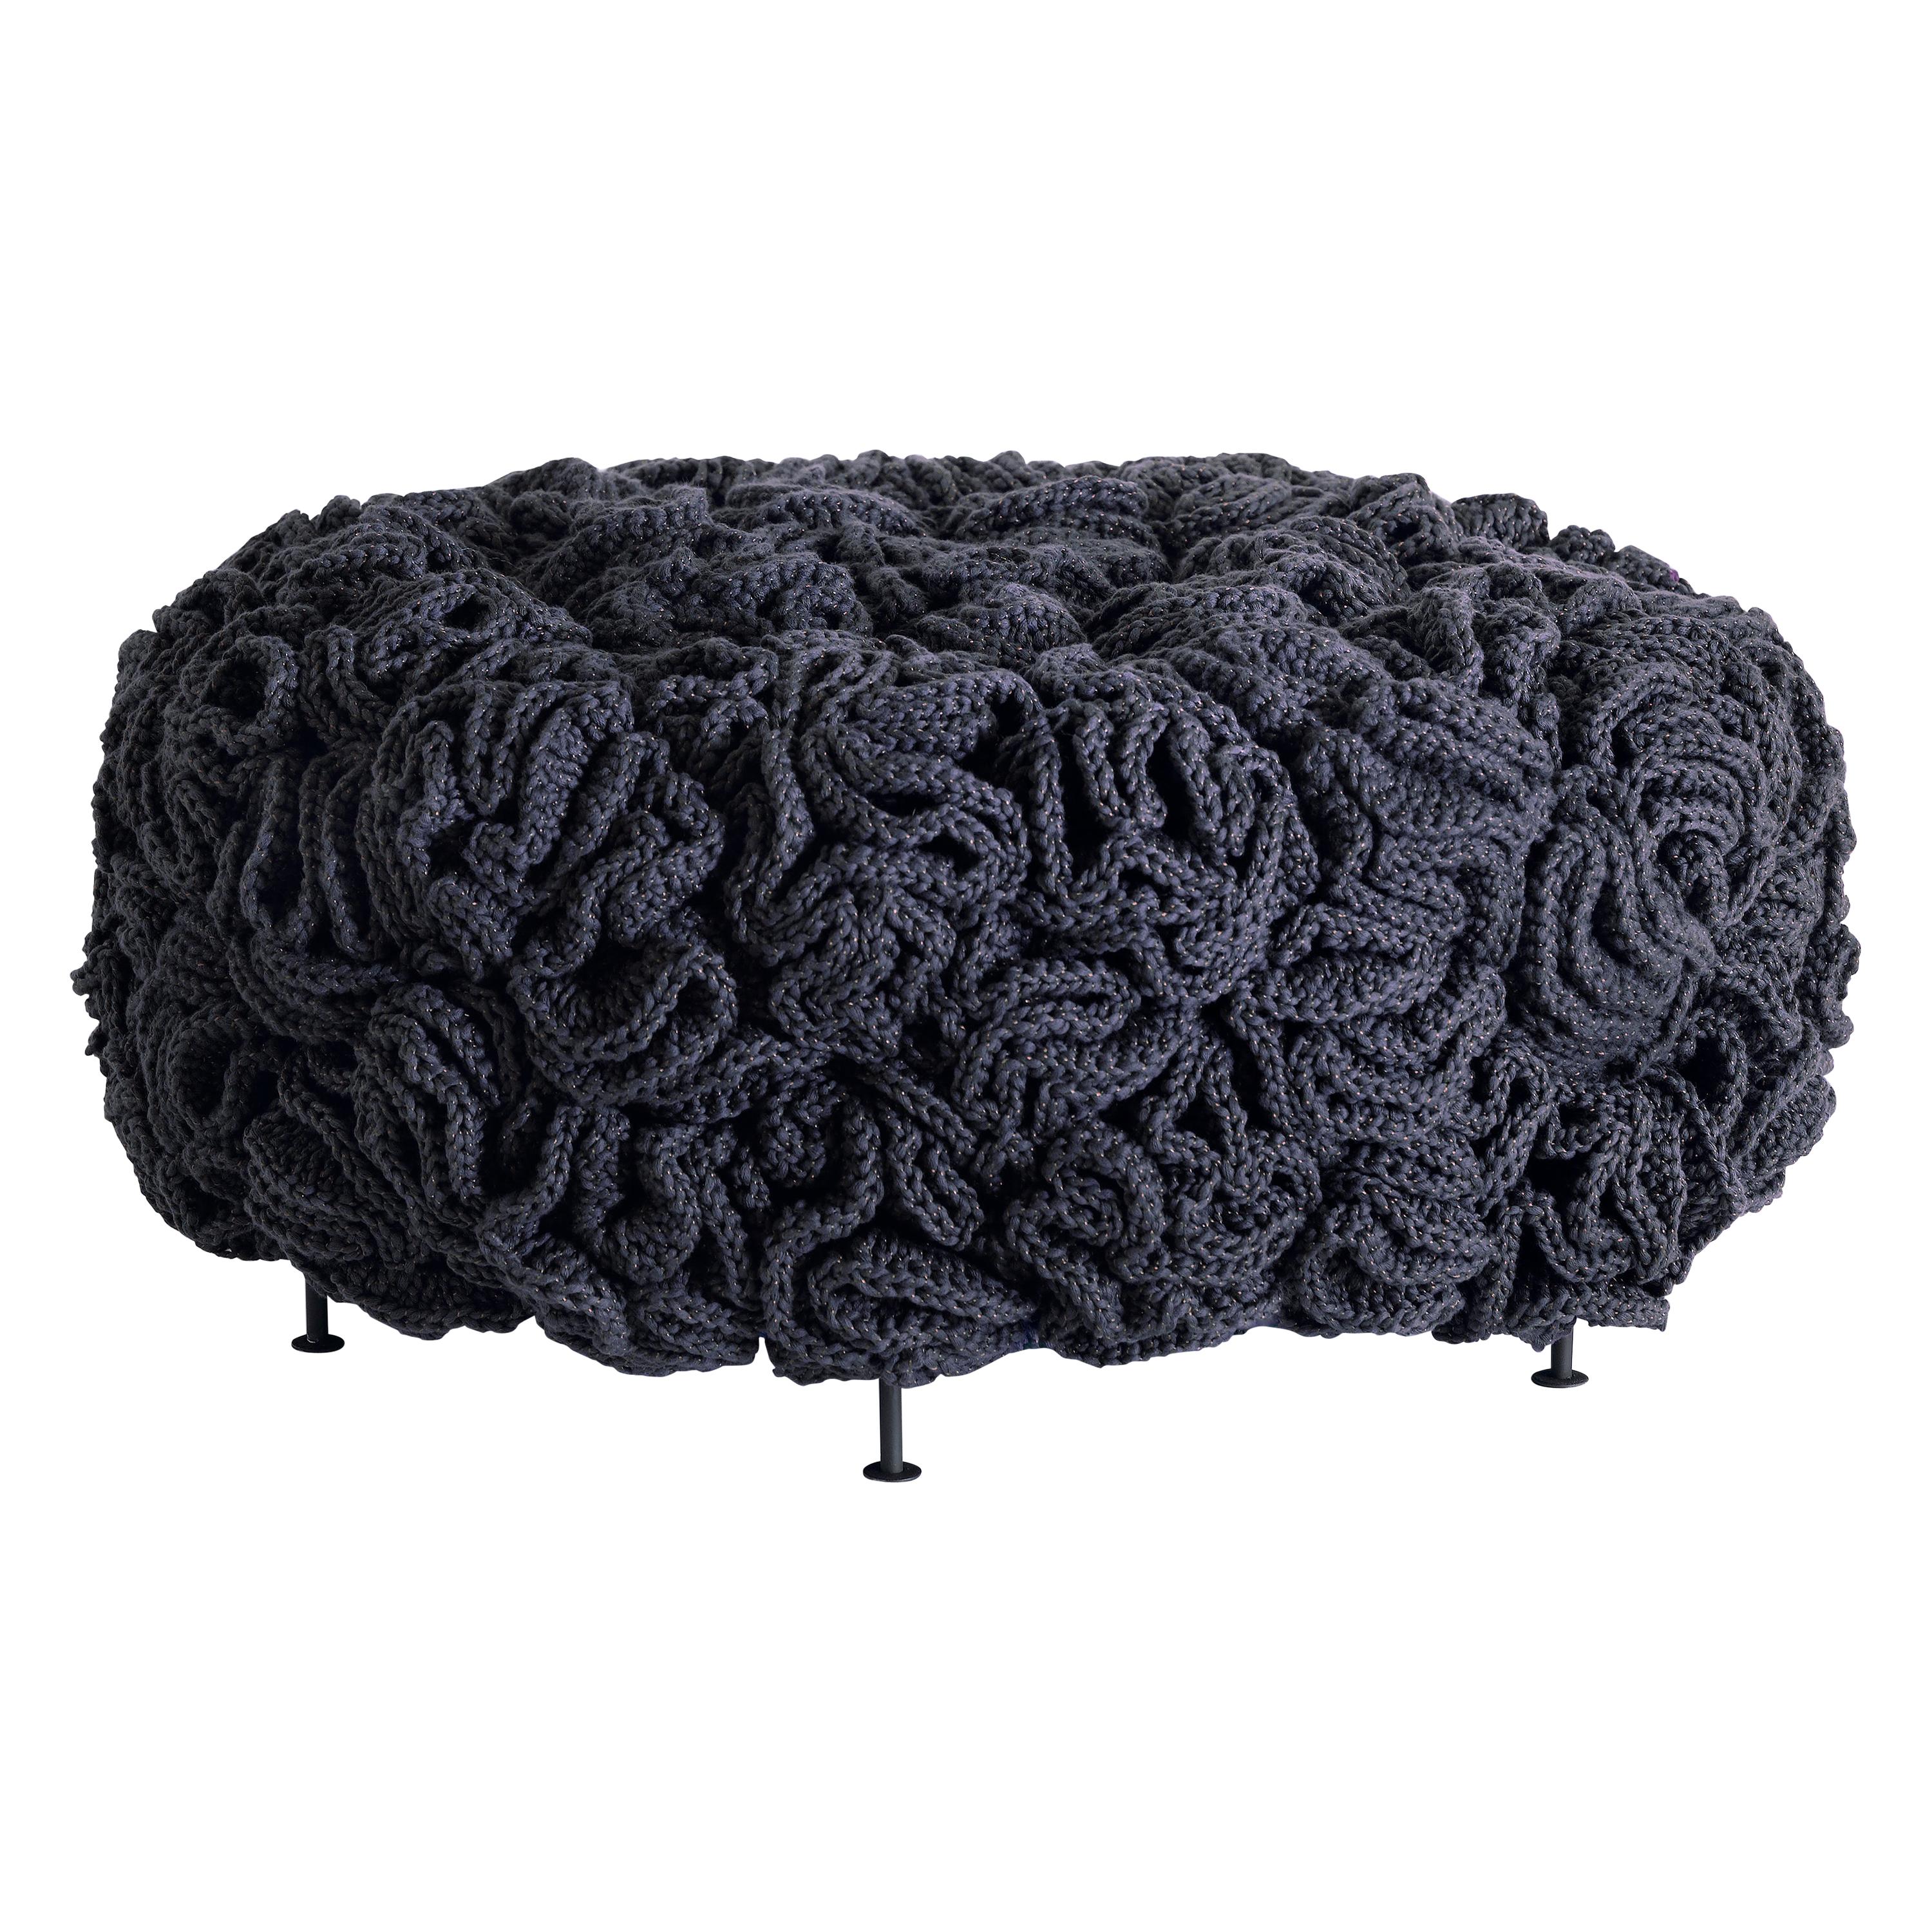 Dark Grey Black Mini Pouf, Handmade Crochet elements in Cotton and Polyester